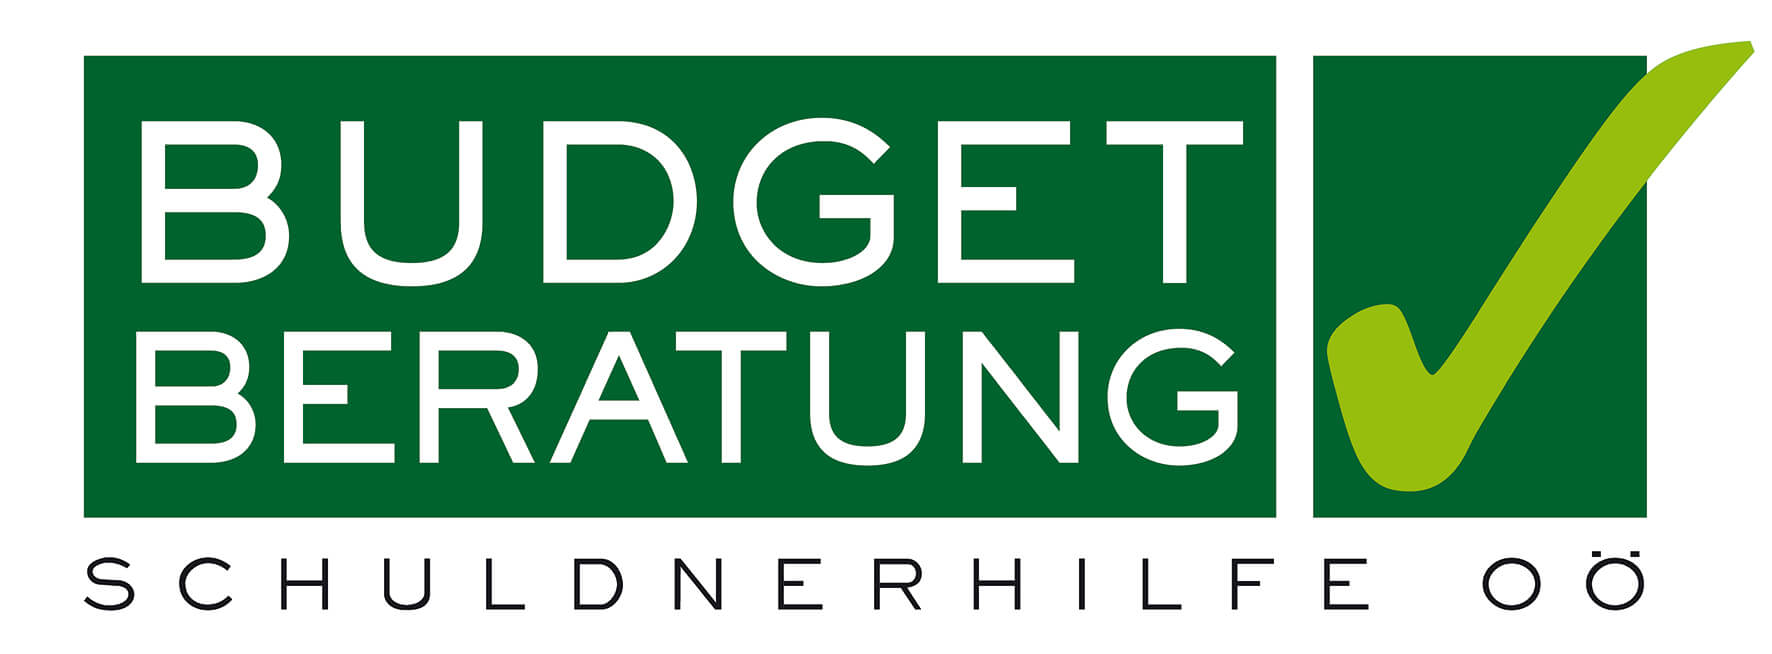 Logo Budgetberatung 2019 Druckauflösung 300dpi 15cm